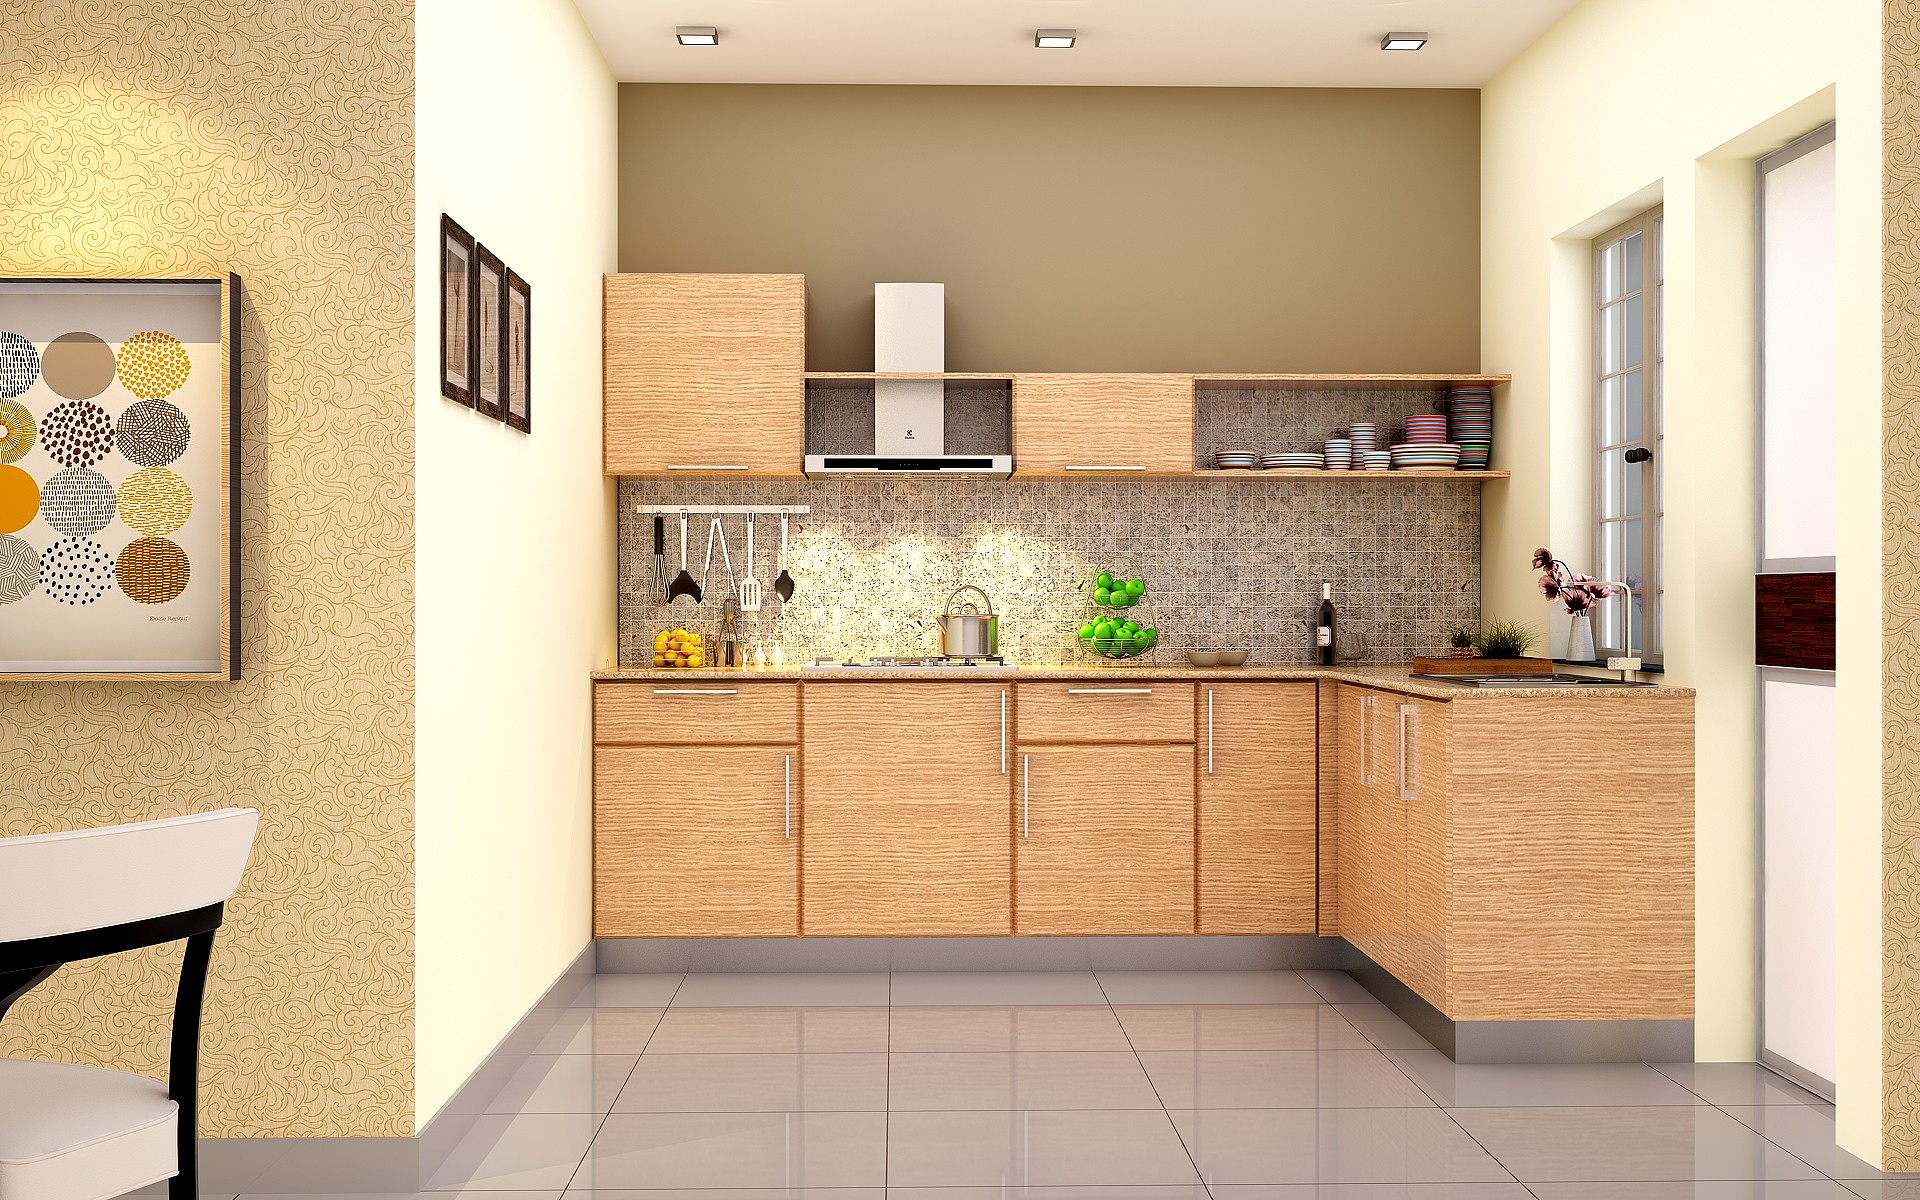 modular kitchen design for small kitchen modular kitchen designs and price latest modular kitchen designs modular kitchen designs catalogue